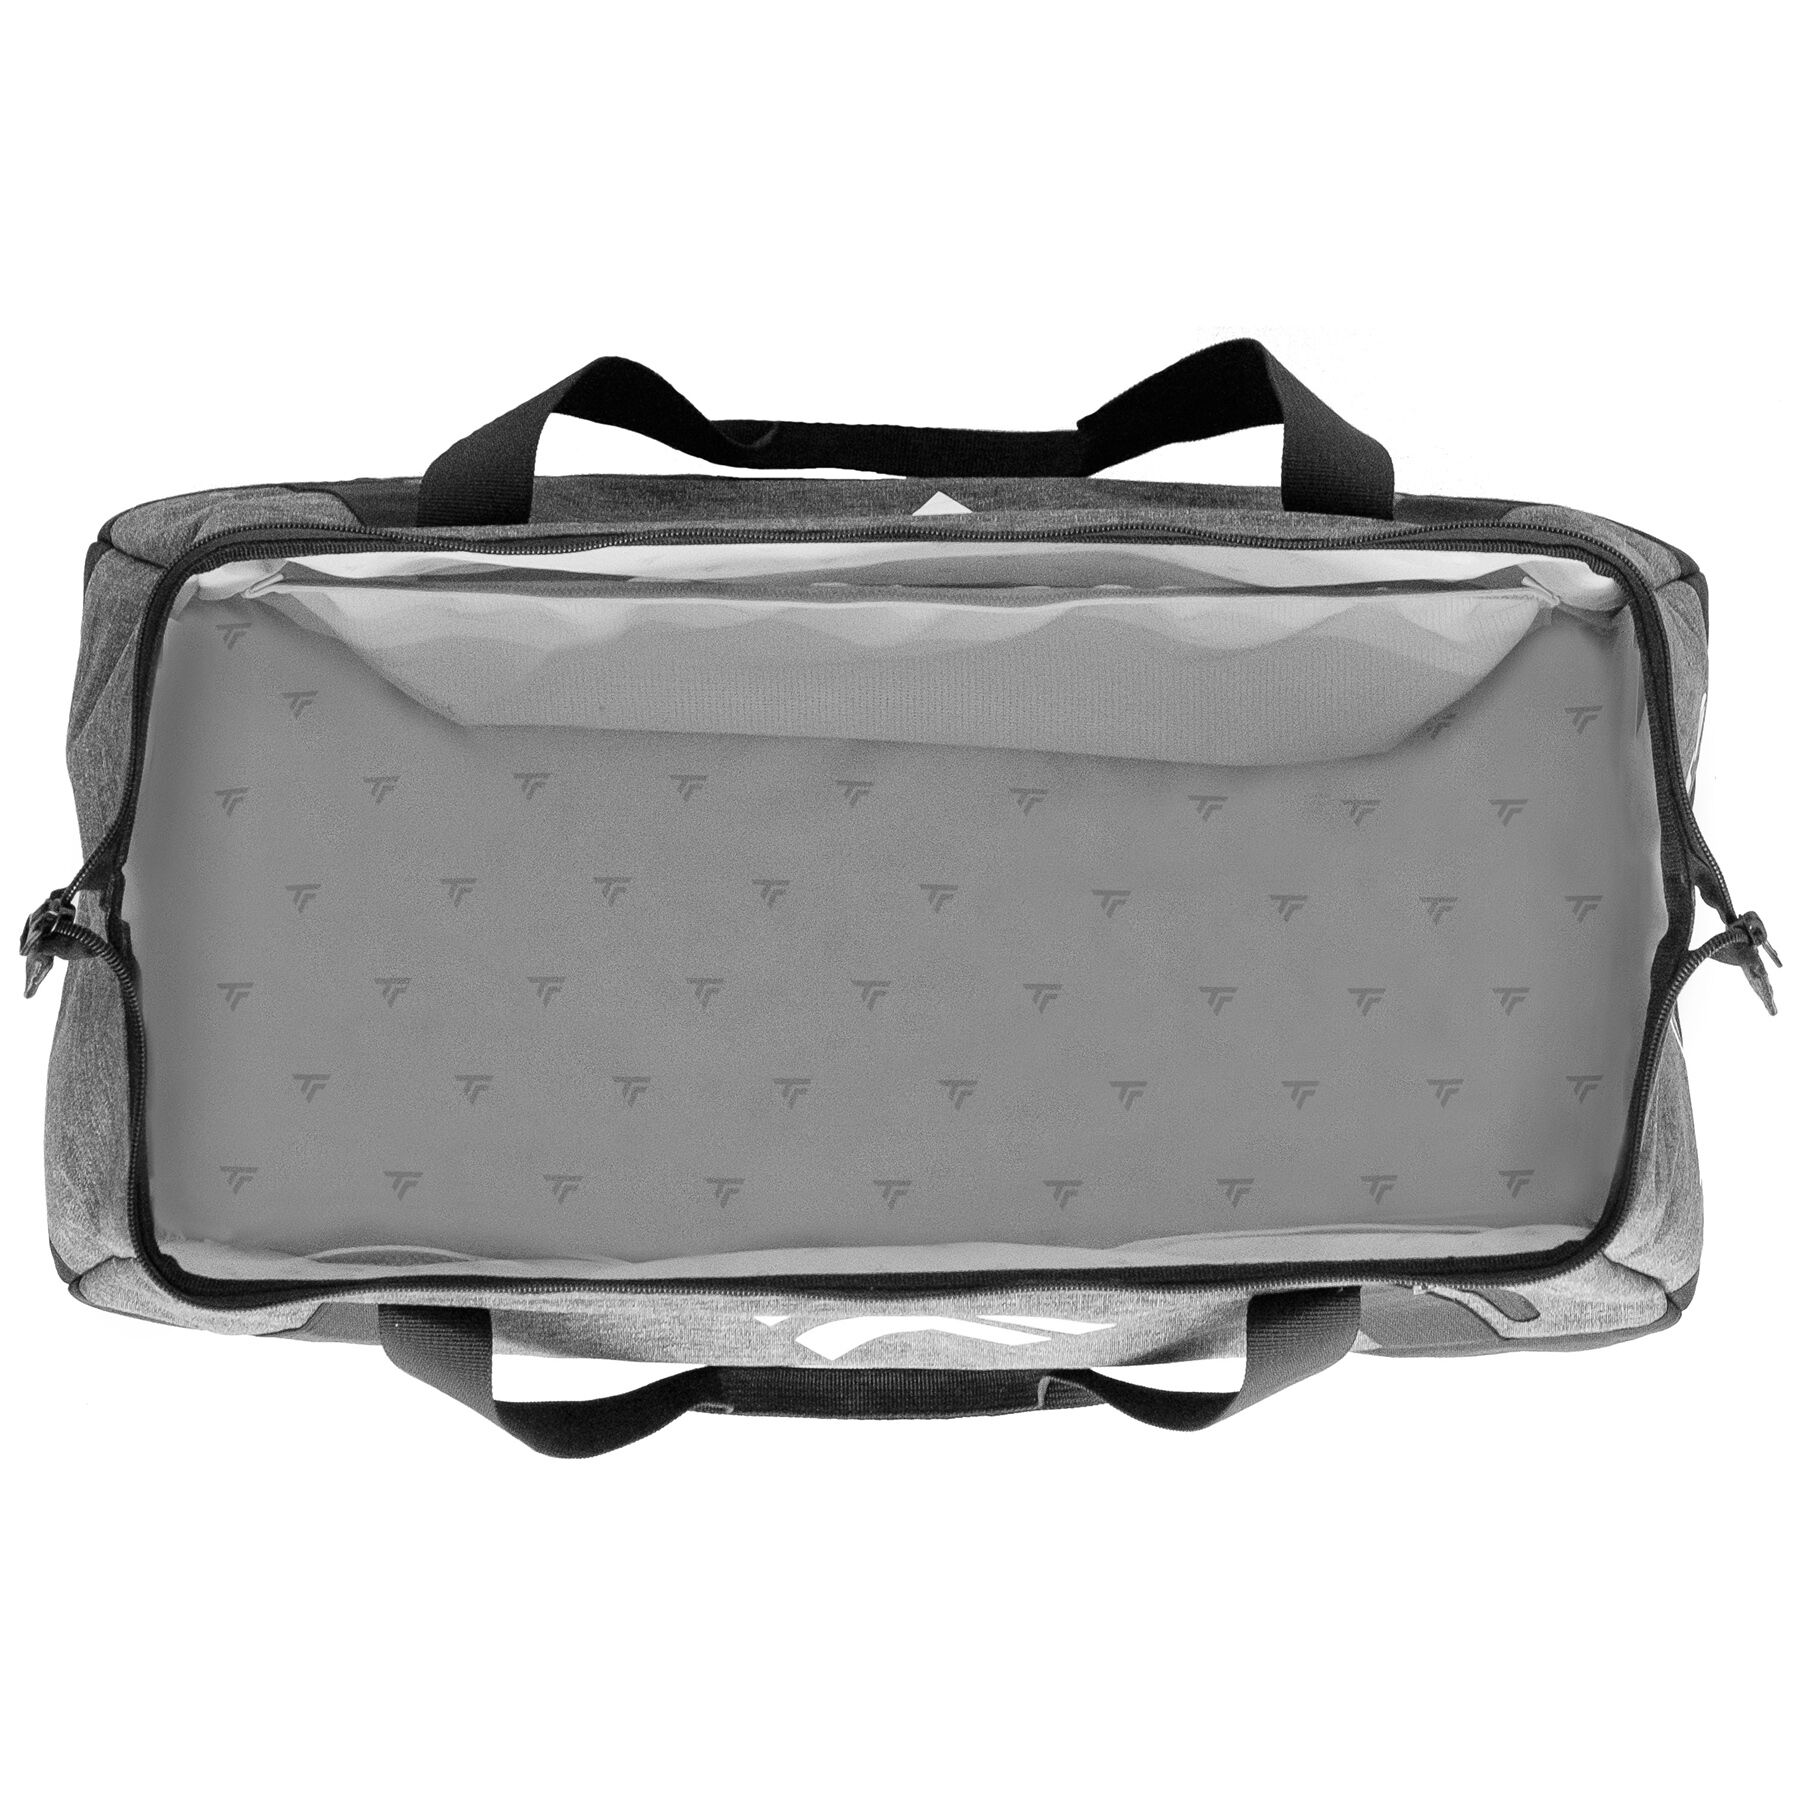 Buy Vision D Bag, Travel Duffle, Code Matte Material, Foldable at Amazon.in